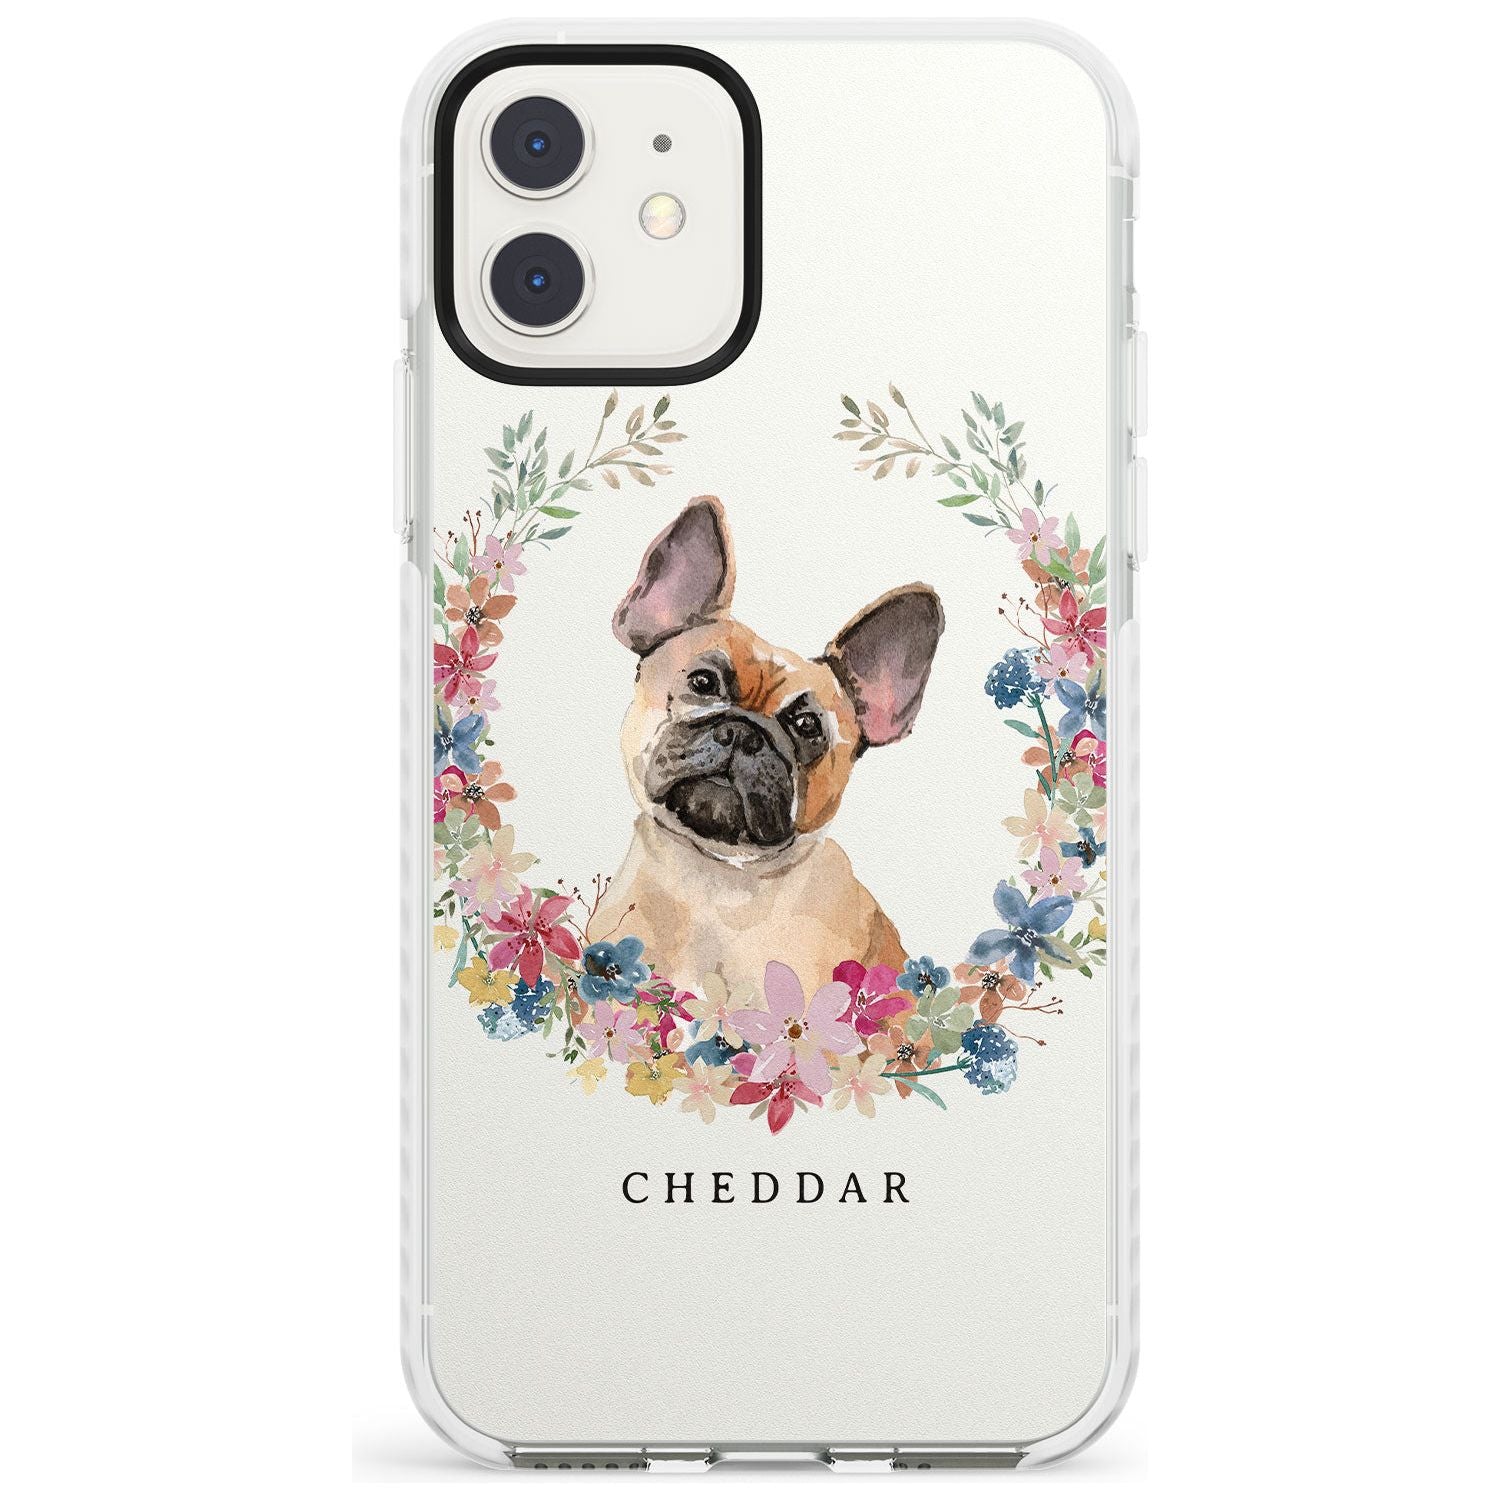 Tan French Bulldog Watercolour Dog Portrait Impact Phone Case for iPhone 11